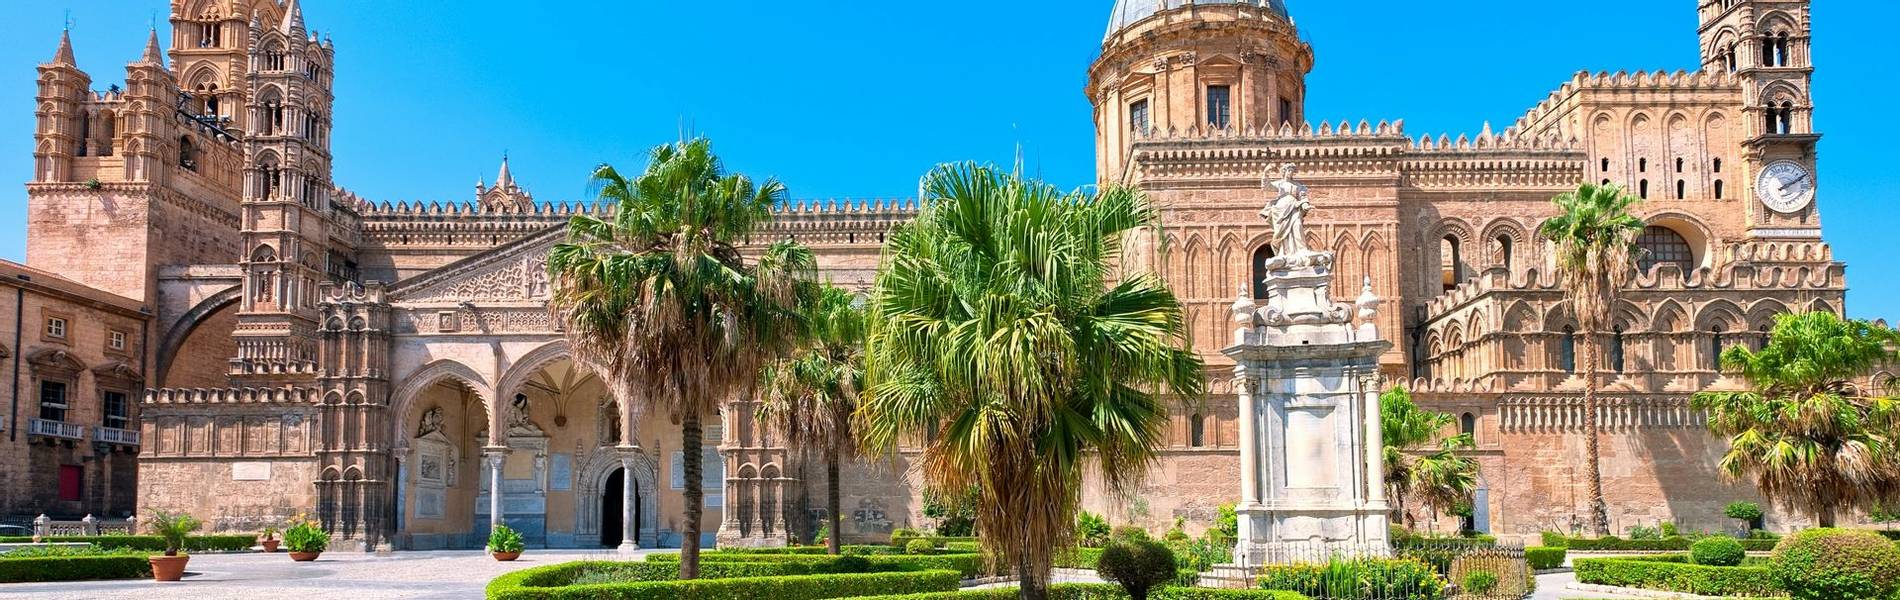 Palermo, Sicily.jpg